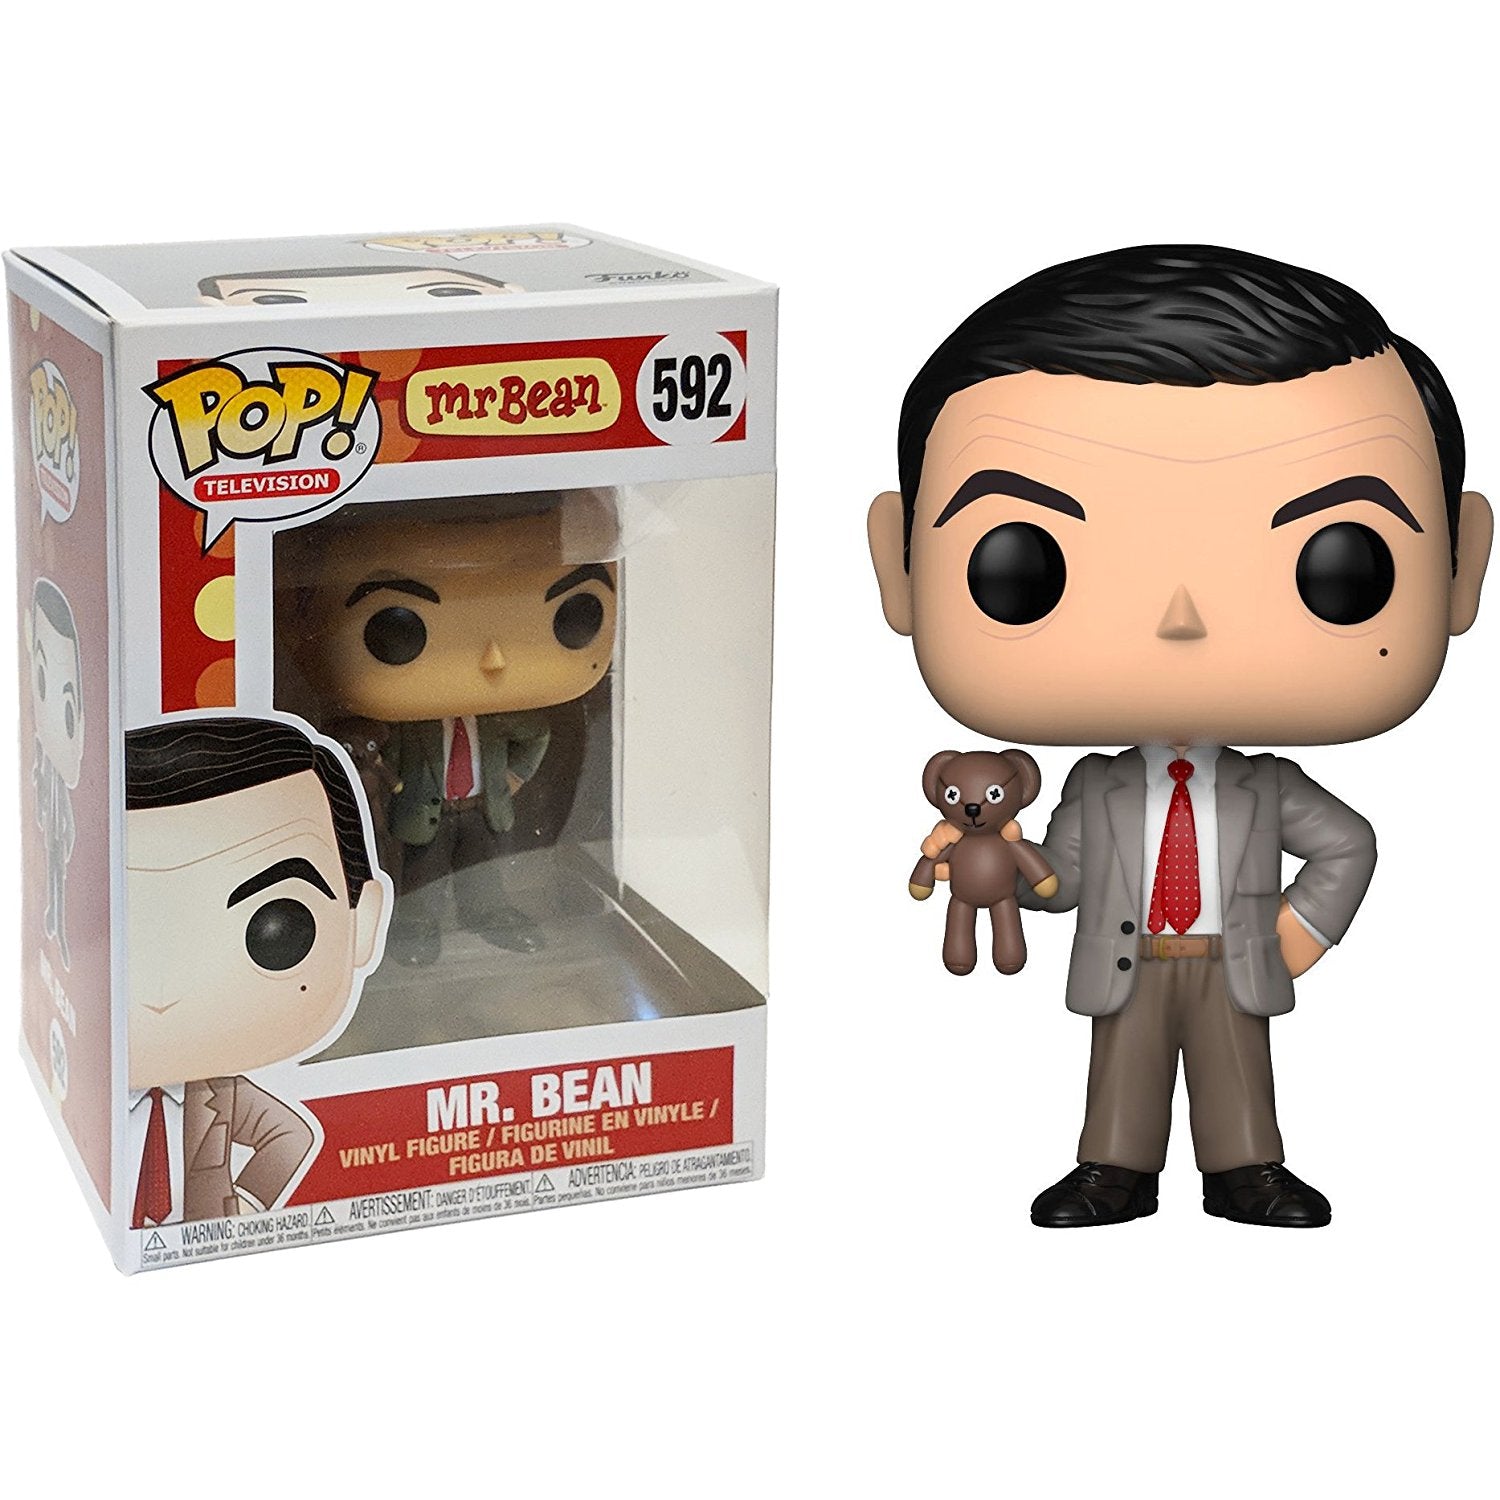 ÎÏÎ¿ÏÎ­Î»ÎµÏÎ¼Î± ÎµÎ¹ÎºÏÎ½Î±Ï Î³Î¹Î± POP! Television: Mr. Bean* #592 Vinyl Figure